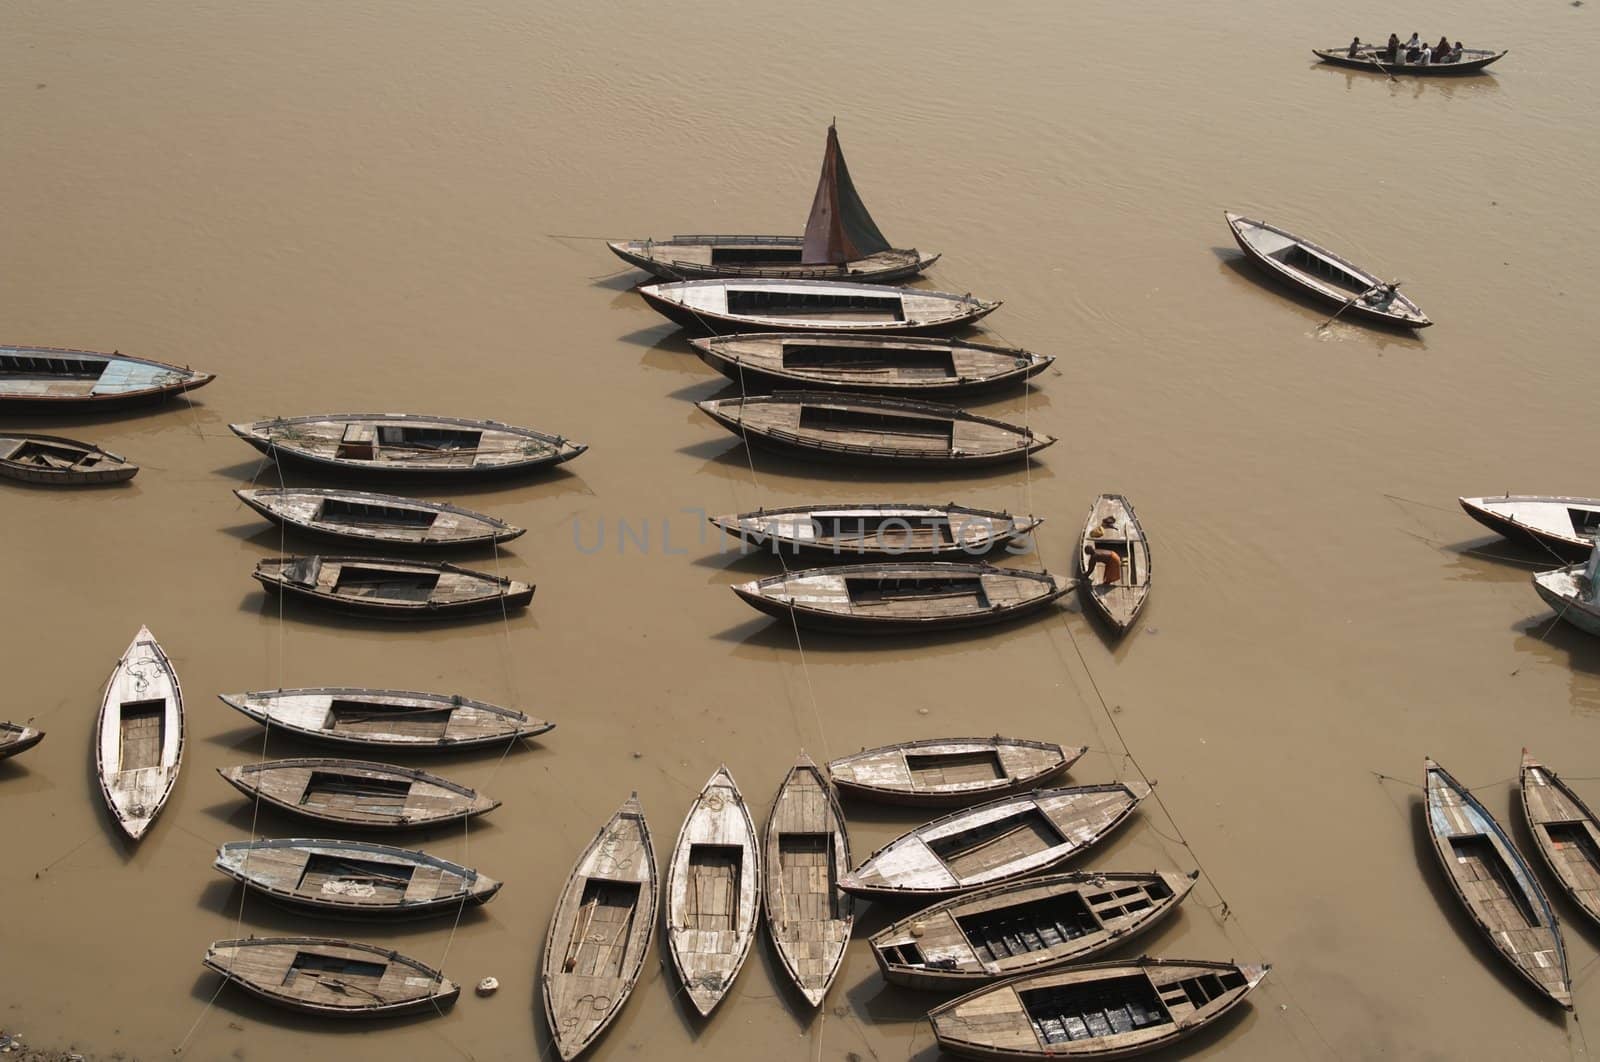 Rowing boats moored on the Ganges River at Varanasi, India